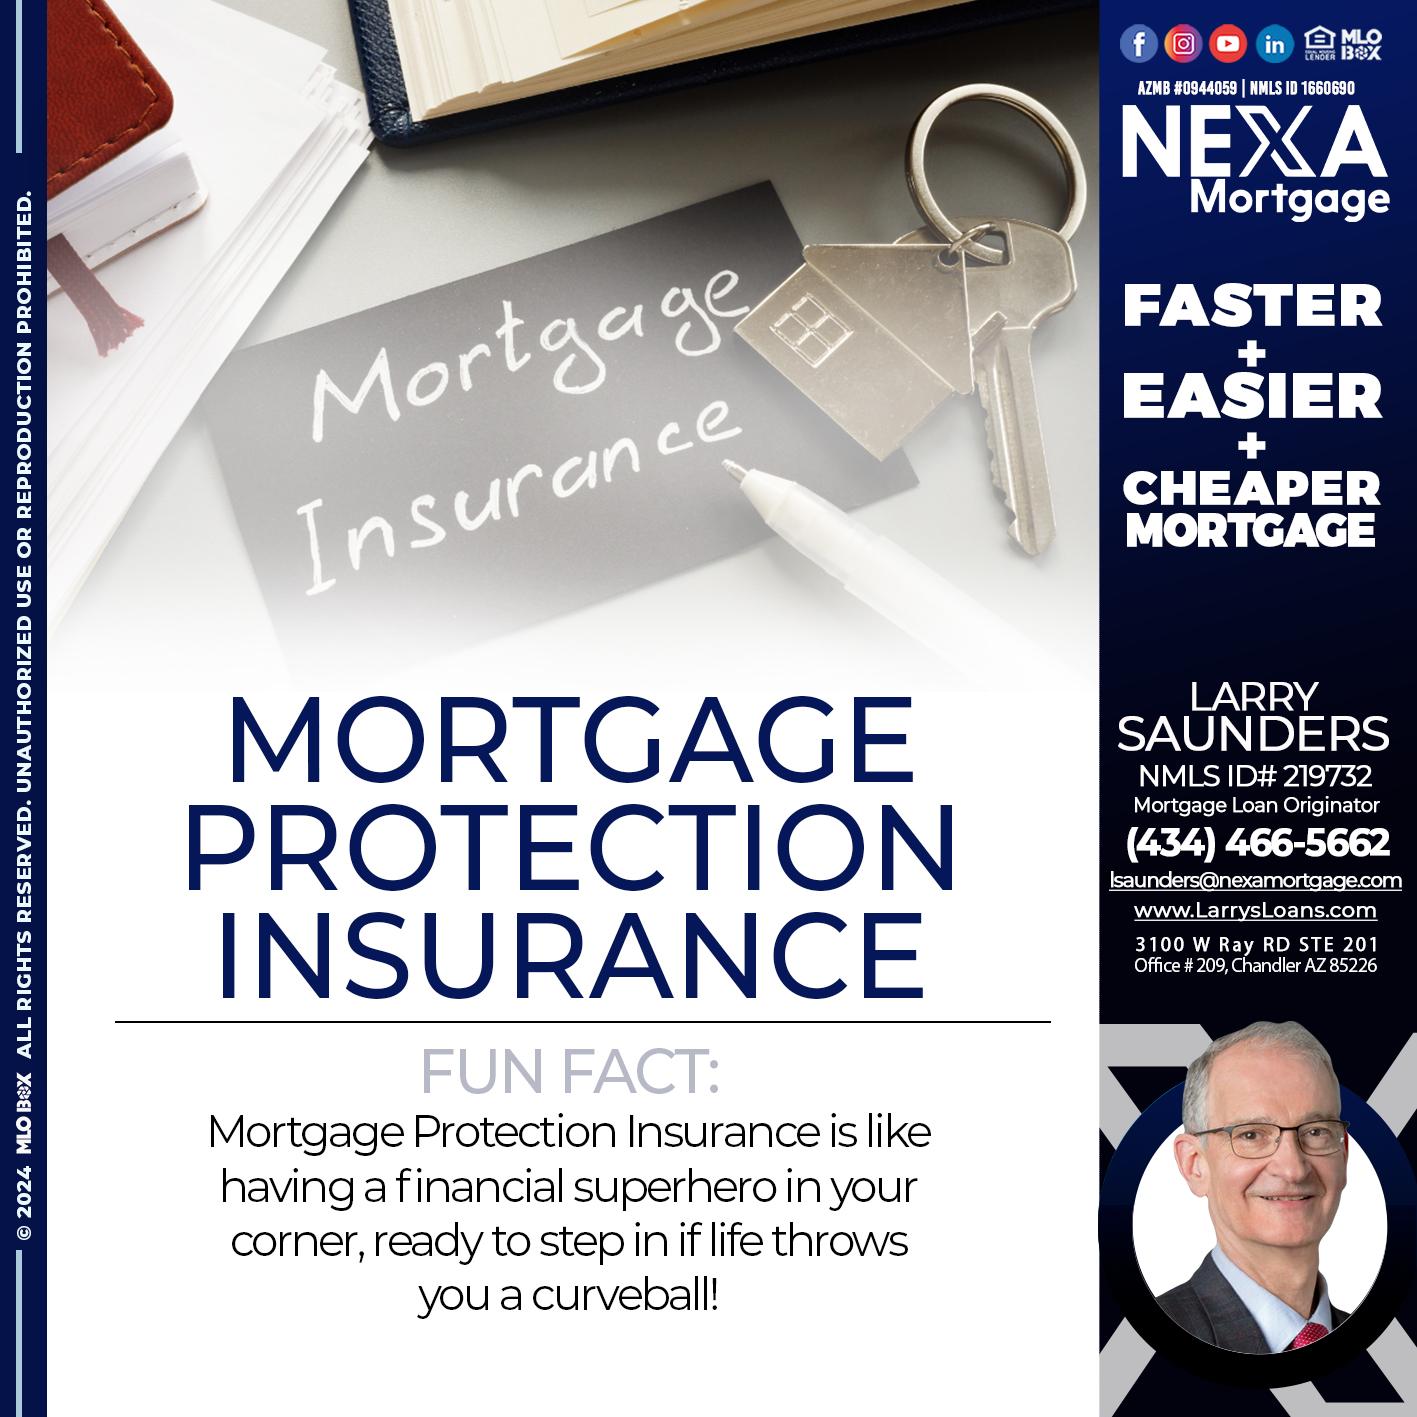 mortgage protection - Larry Saunders -Mortgage Loan Originator